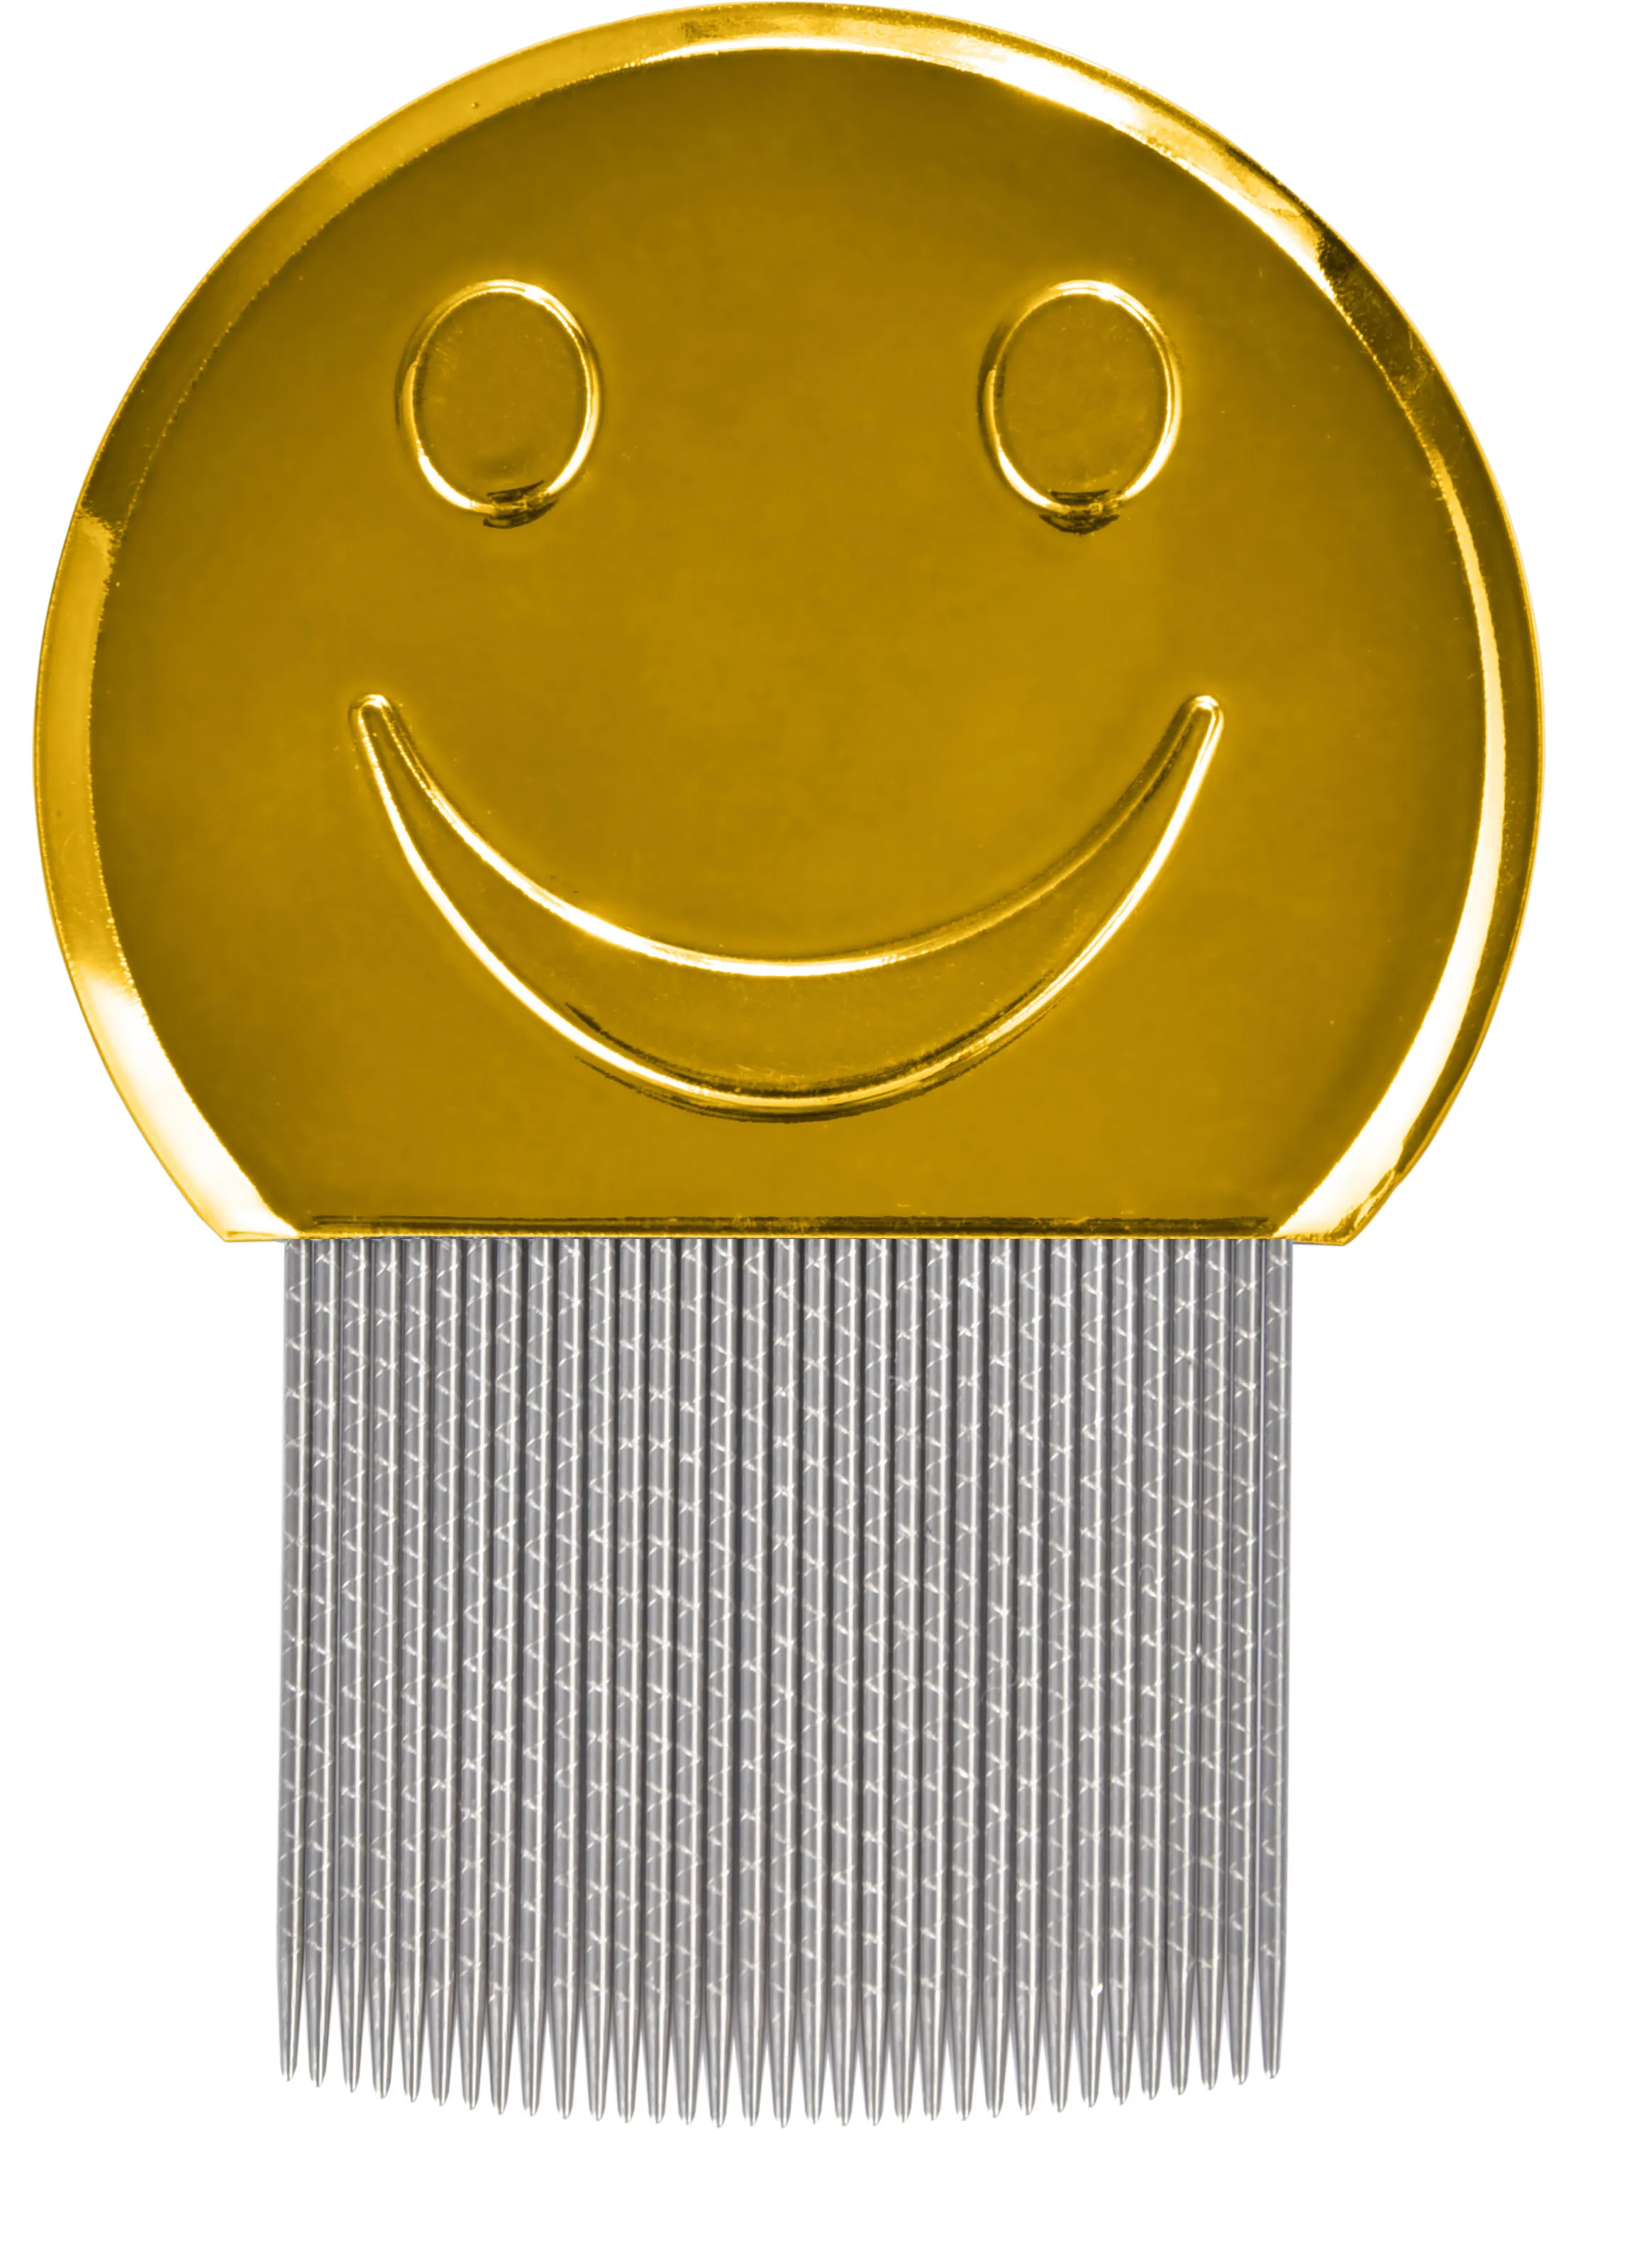 
Golden smile anti nit head lice comb 